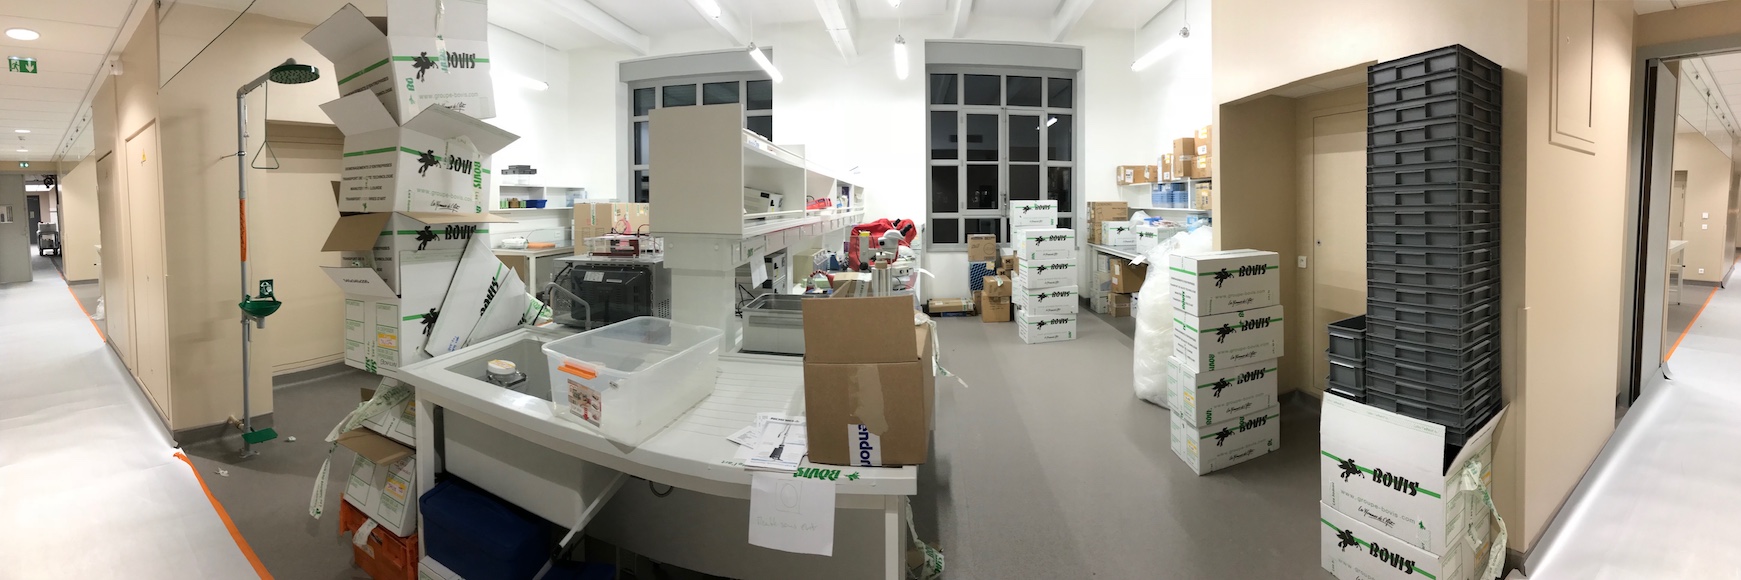 Fresh lab space